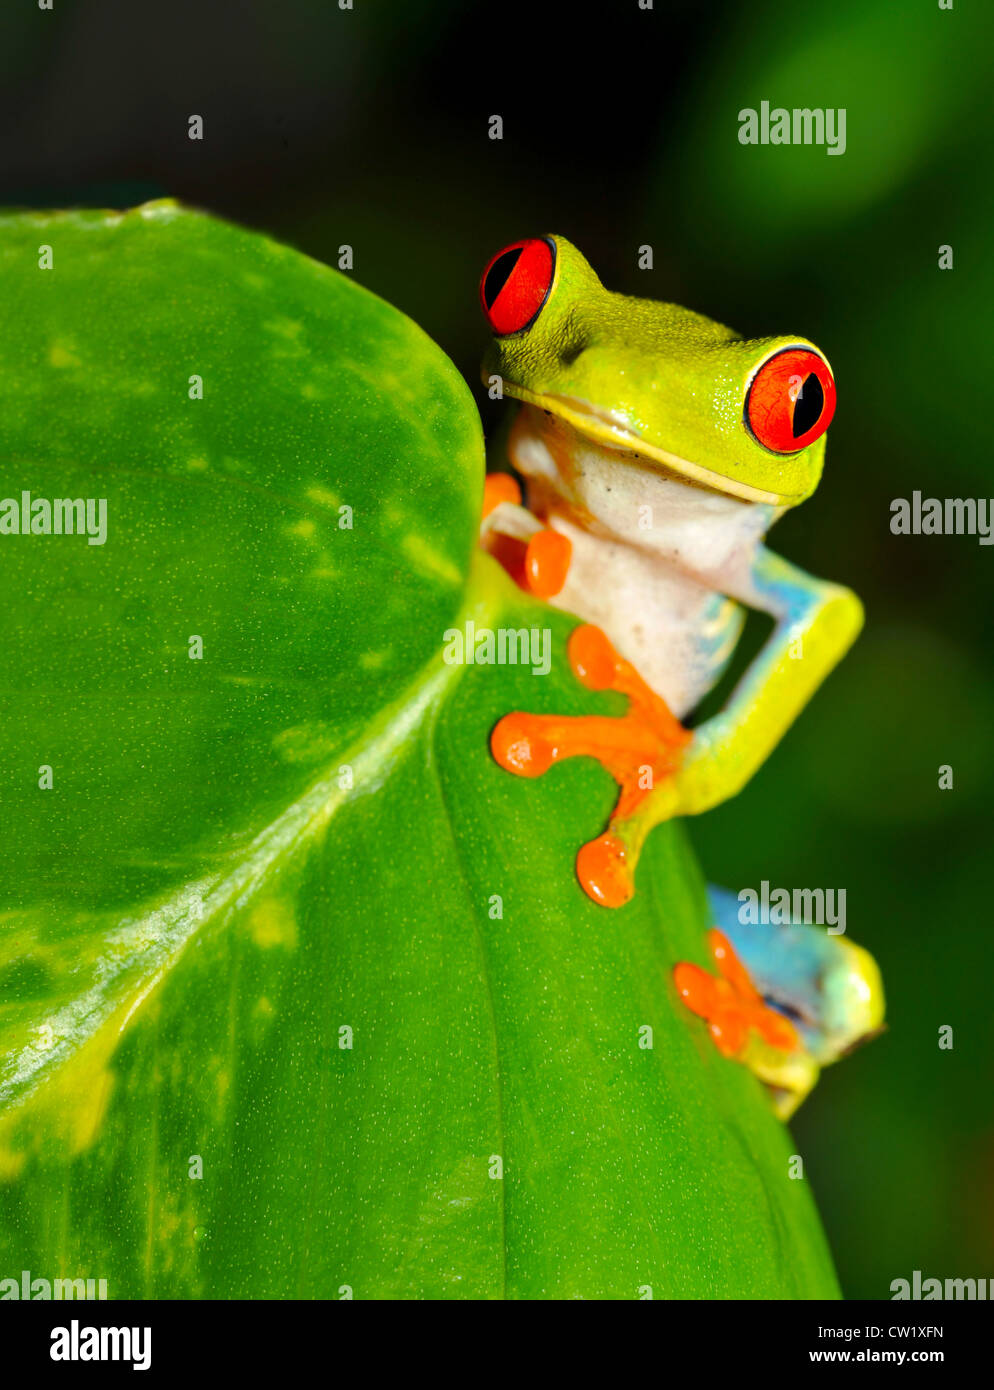 Rote Augen, grüner Baum oder bunten Blatt Frosch auf Bananenpflanze, See  arenal, Costa Rica, lateinisch america.exotic Amphibien Rainfrog Dschungel  Stockfotografie - Alamy